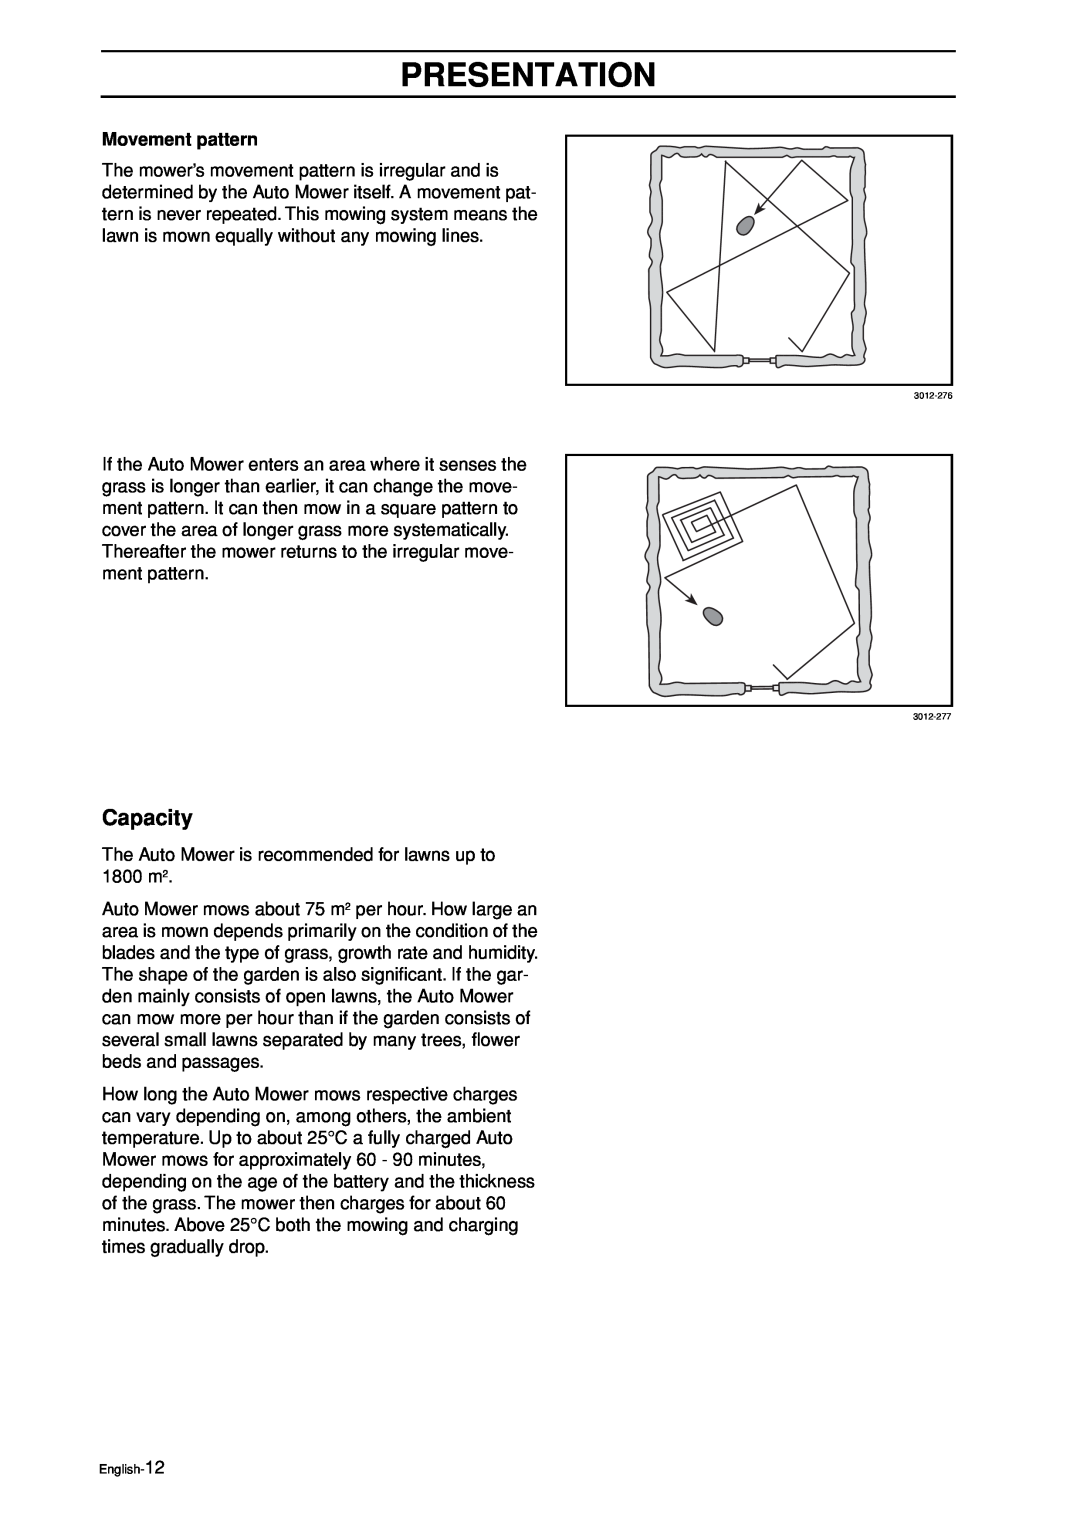 Husqvarna Auto Mower manual Capacity, Presentation, Movement pattern 